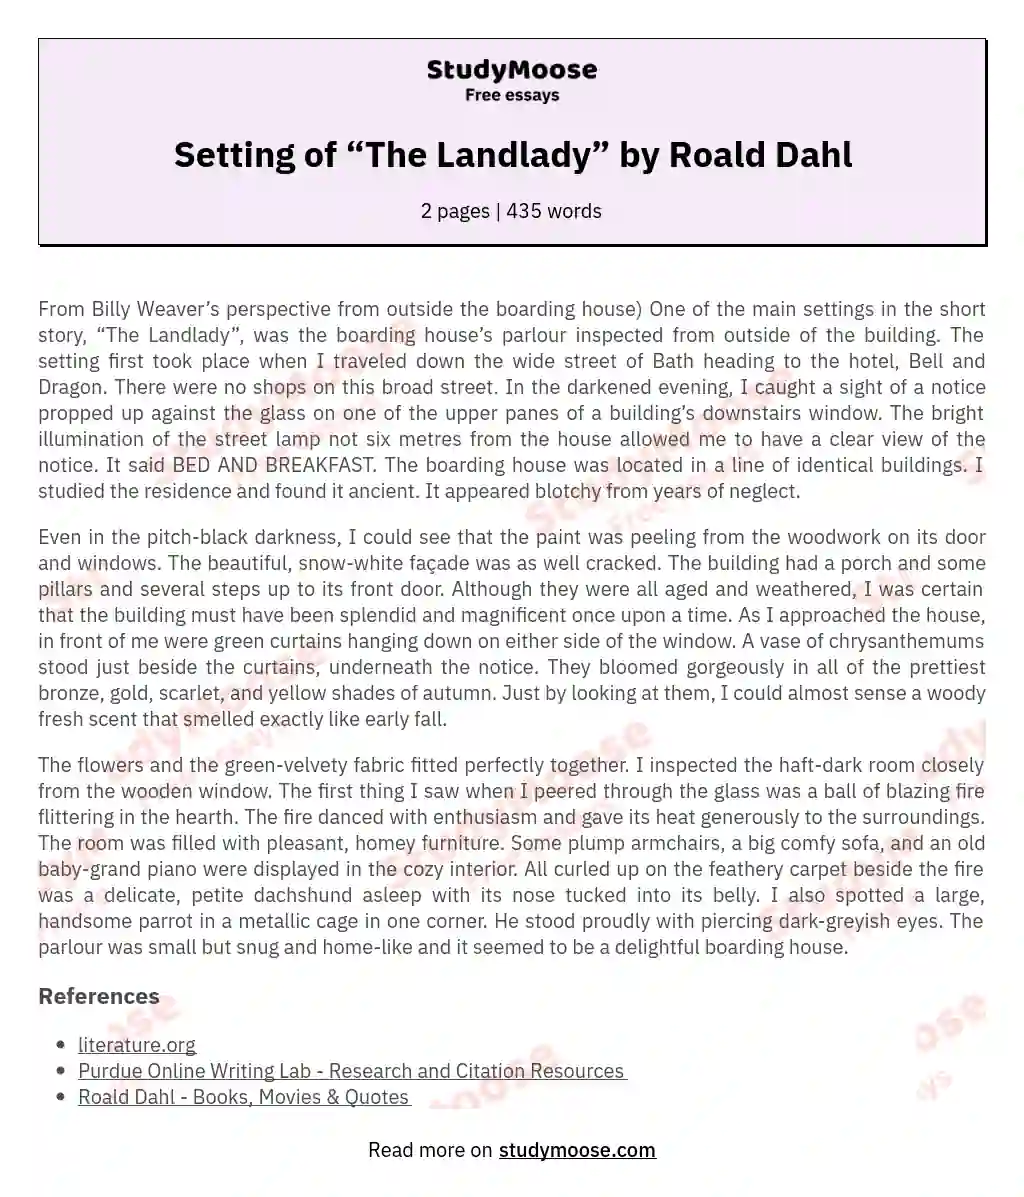 Setting of “The Landlady” by Roald Dahl essay